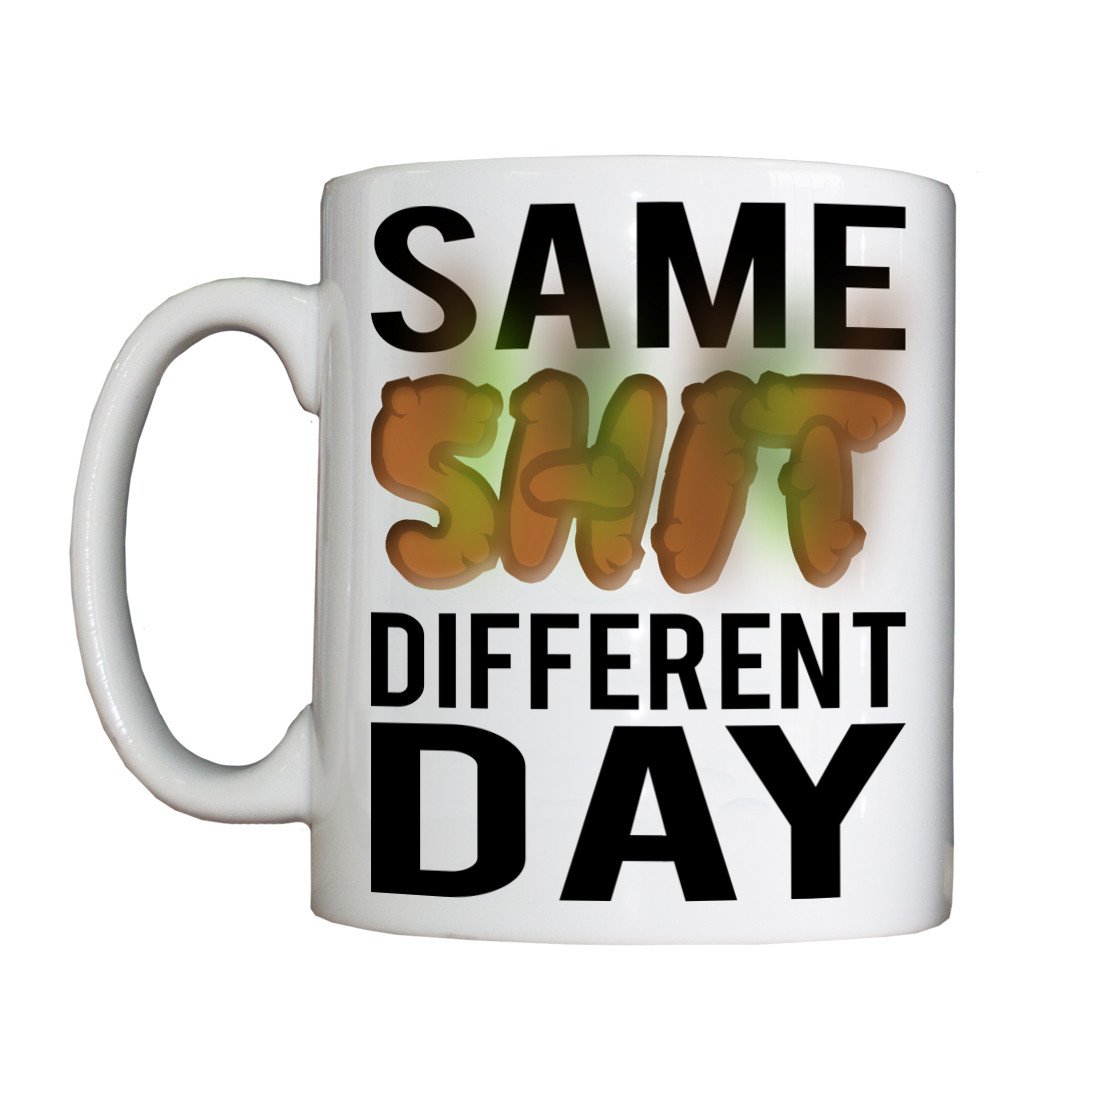 Same Shit Different Day Mug